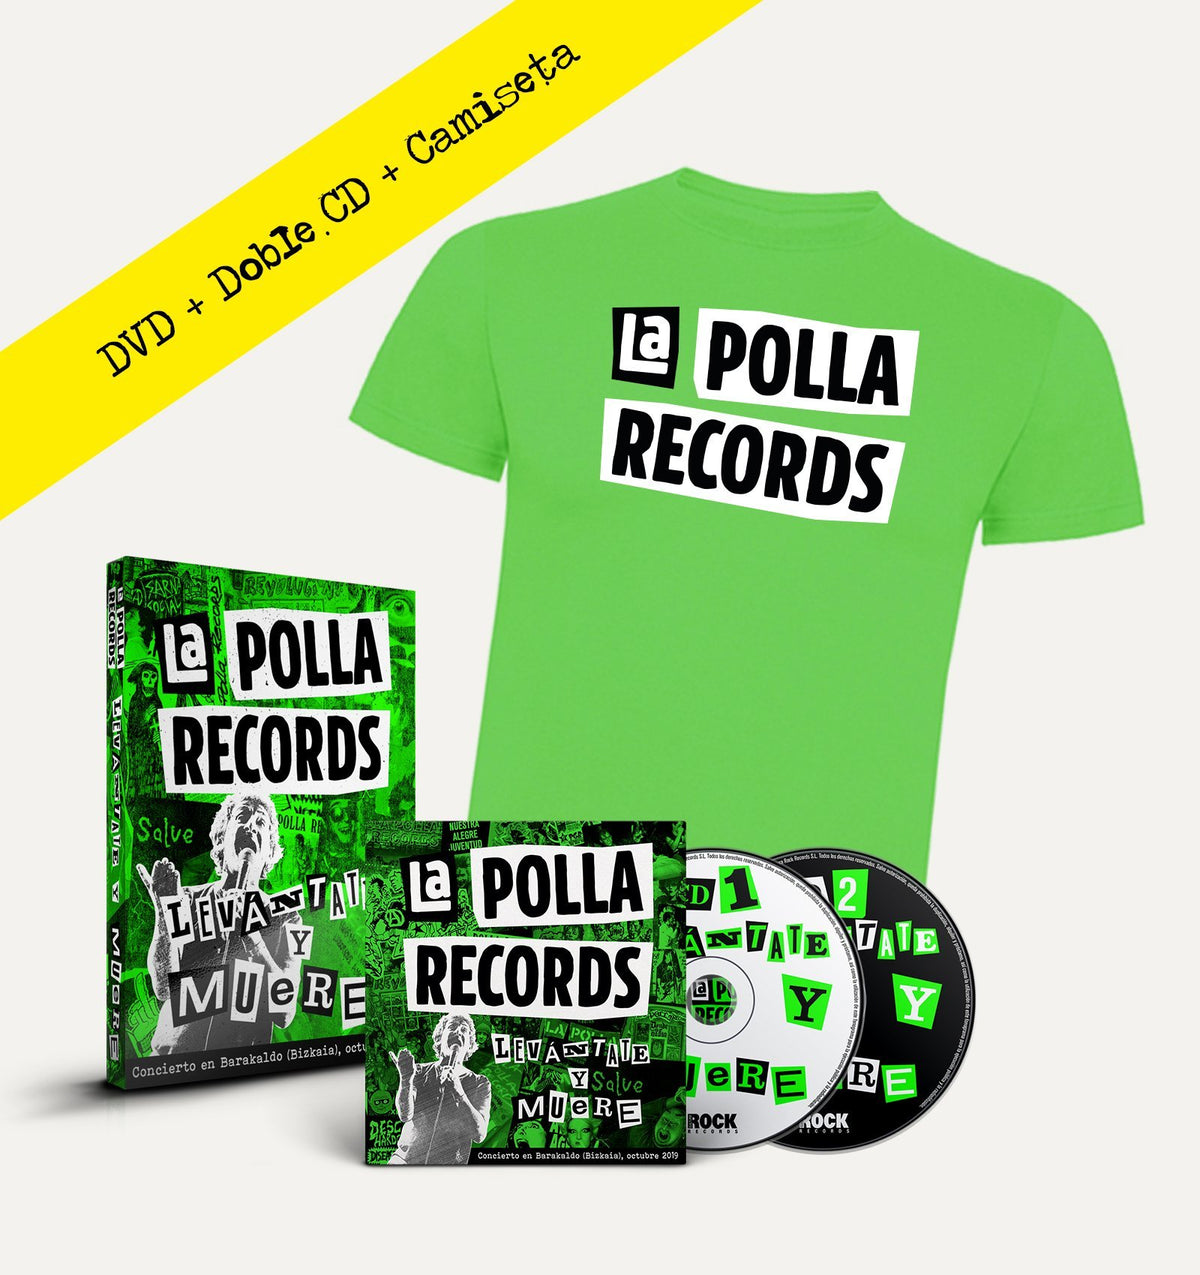 Pack Doble CD + DVD + Camiseta La Polla Records "Levántate y Muere" - Rocktud - La Polla Records